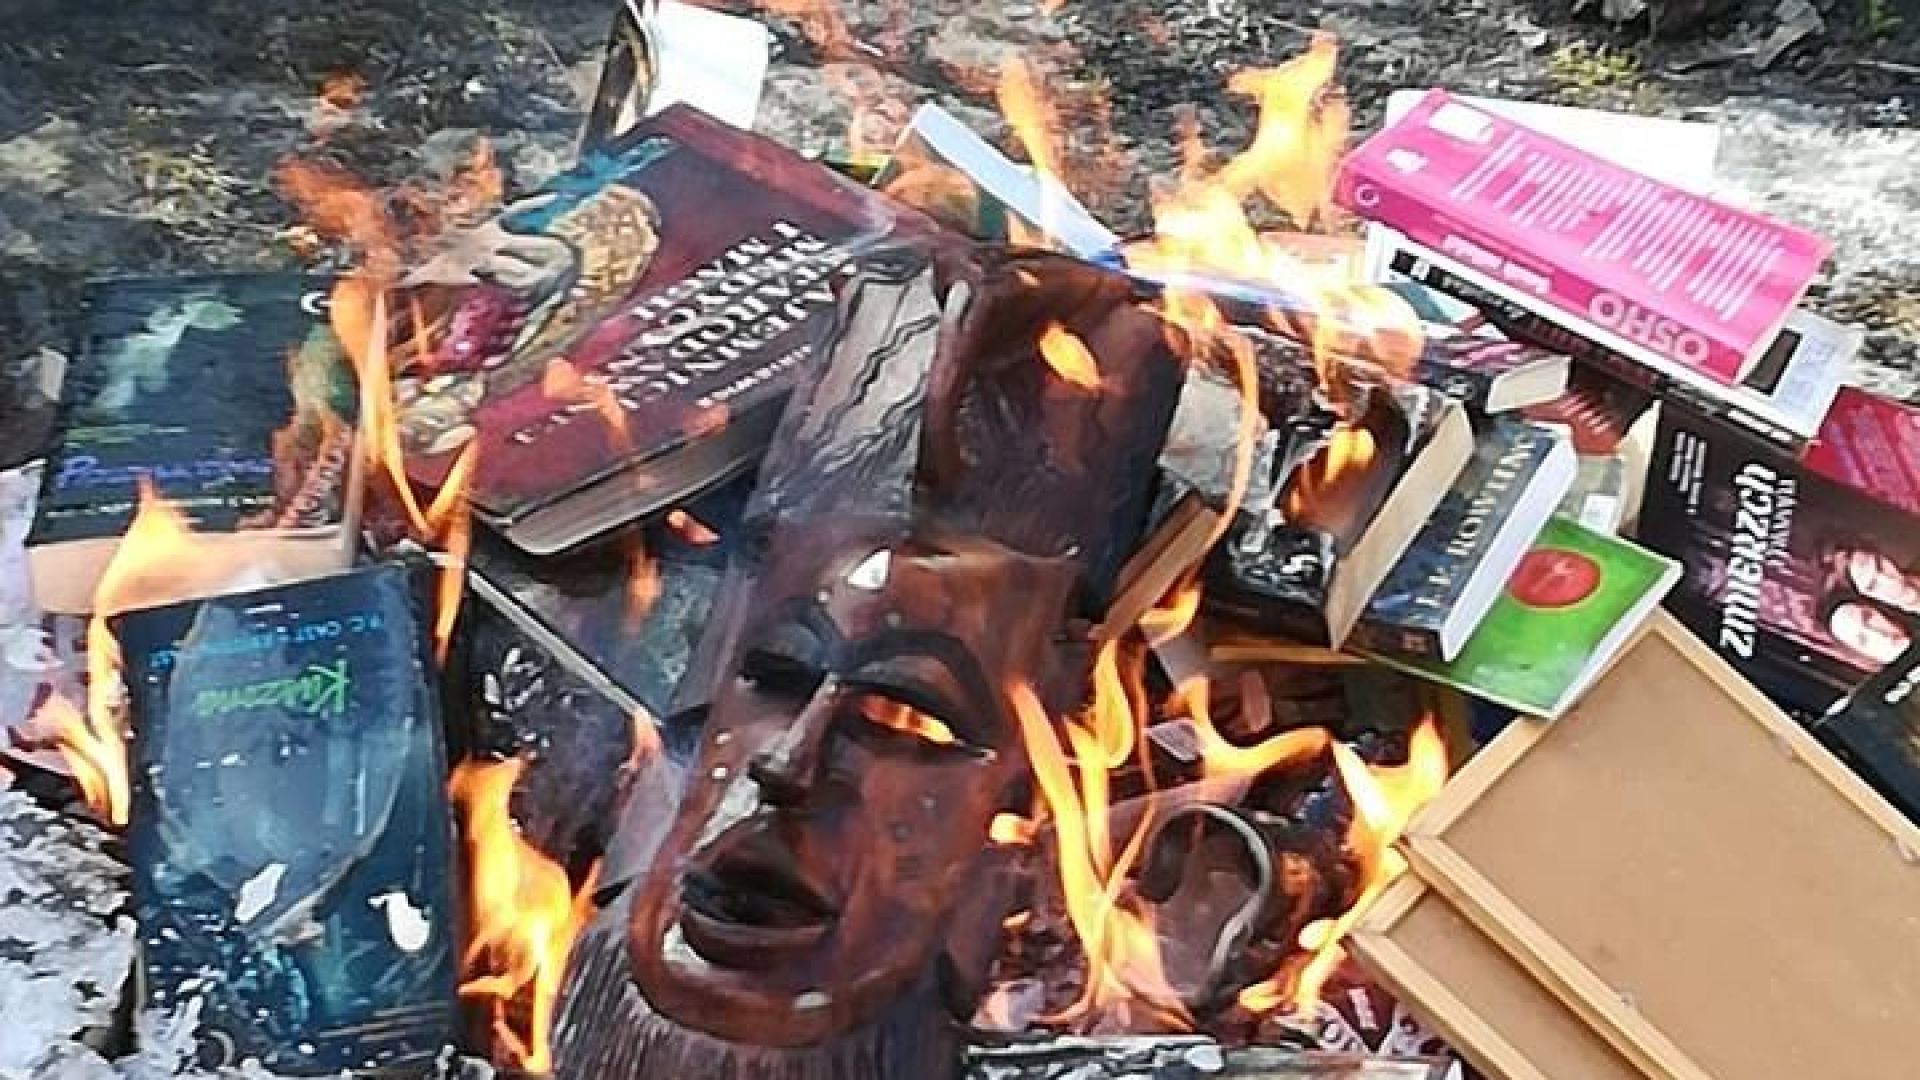 Католически свещеници в полския град Гданск изгориха книги за които